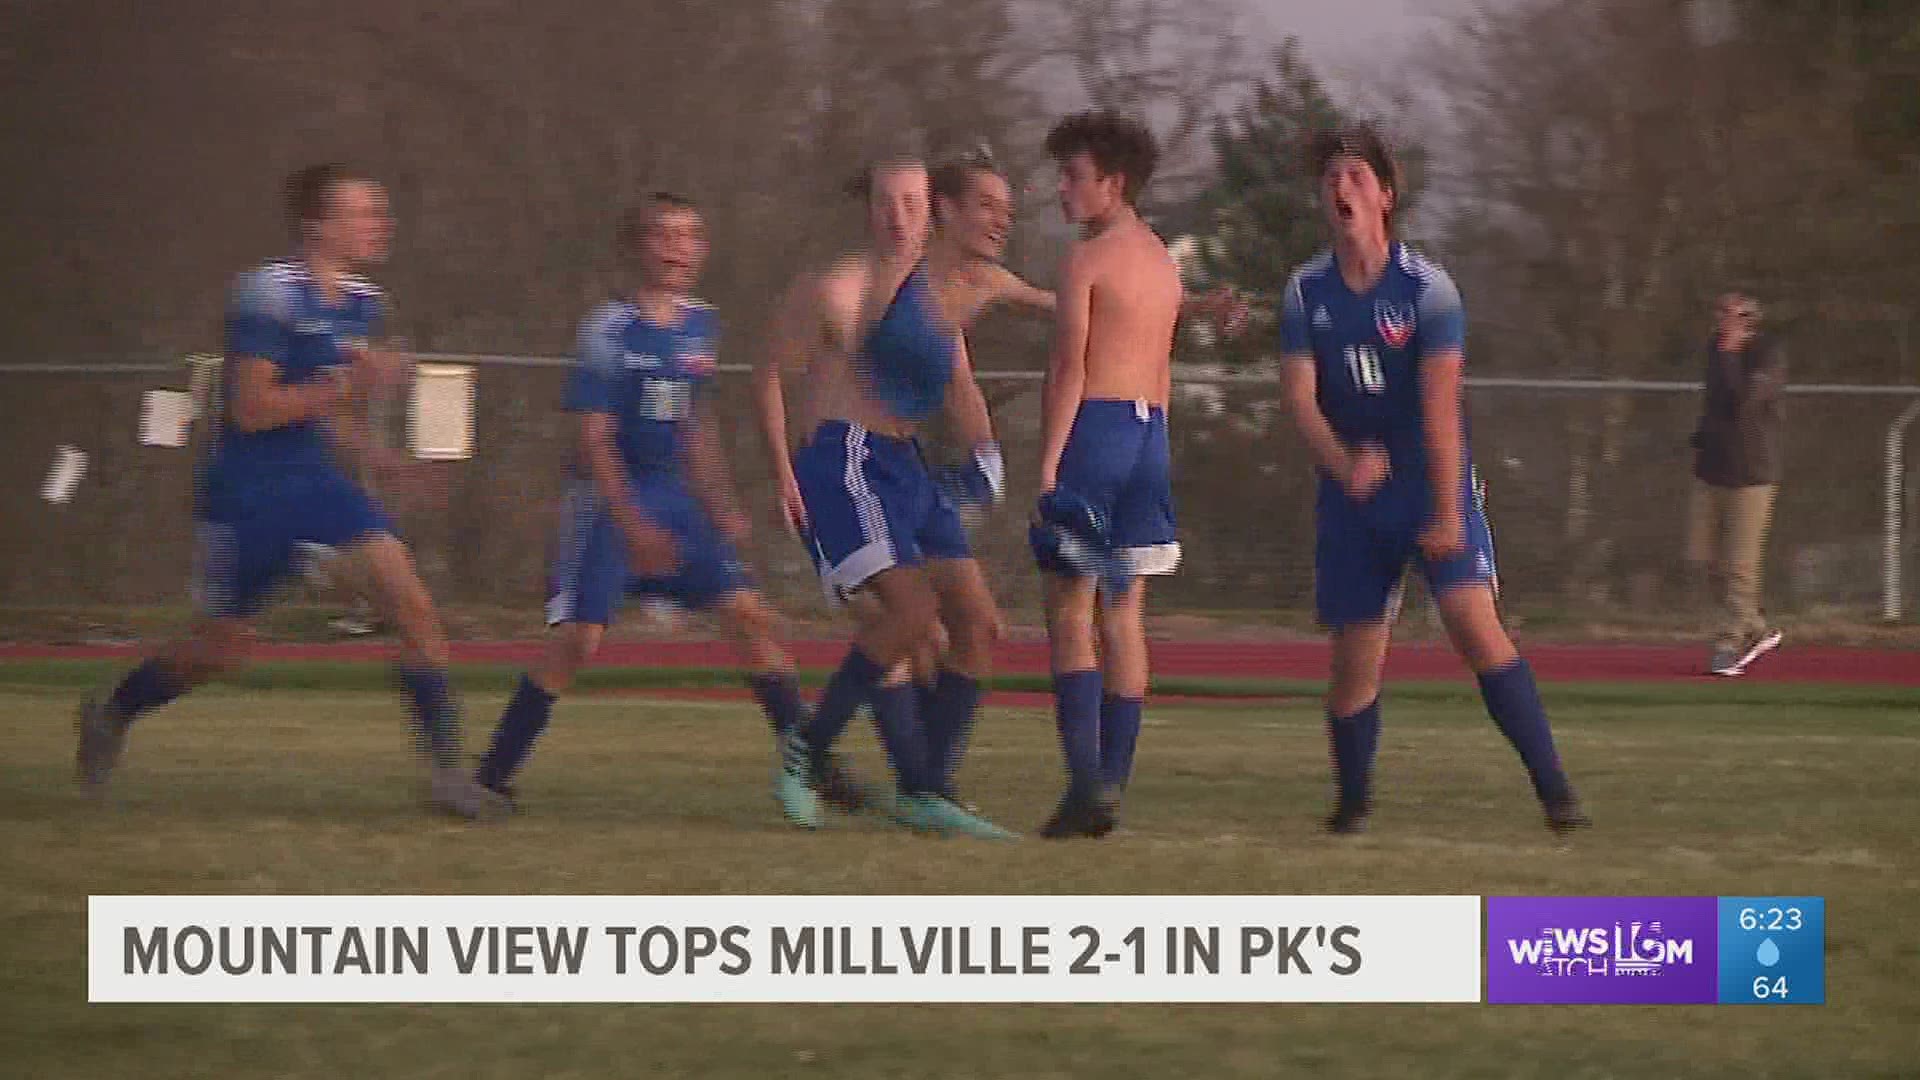 Mountain View edges Millville in Boys 'A' on PK